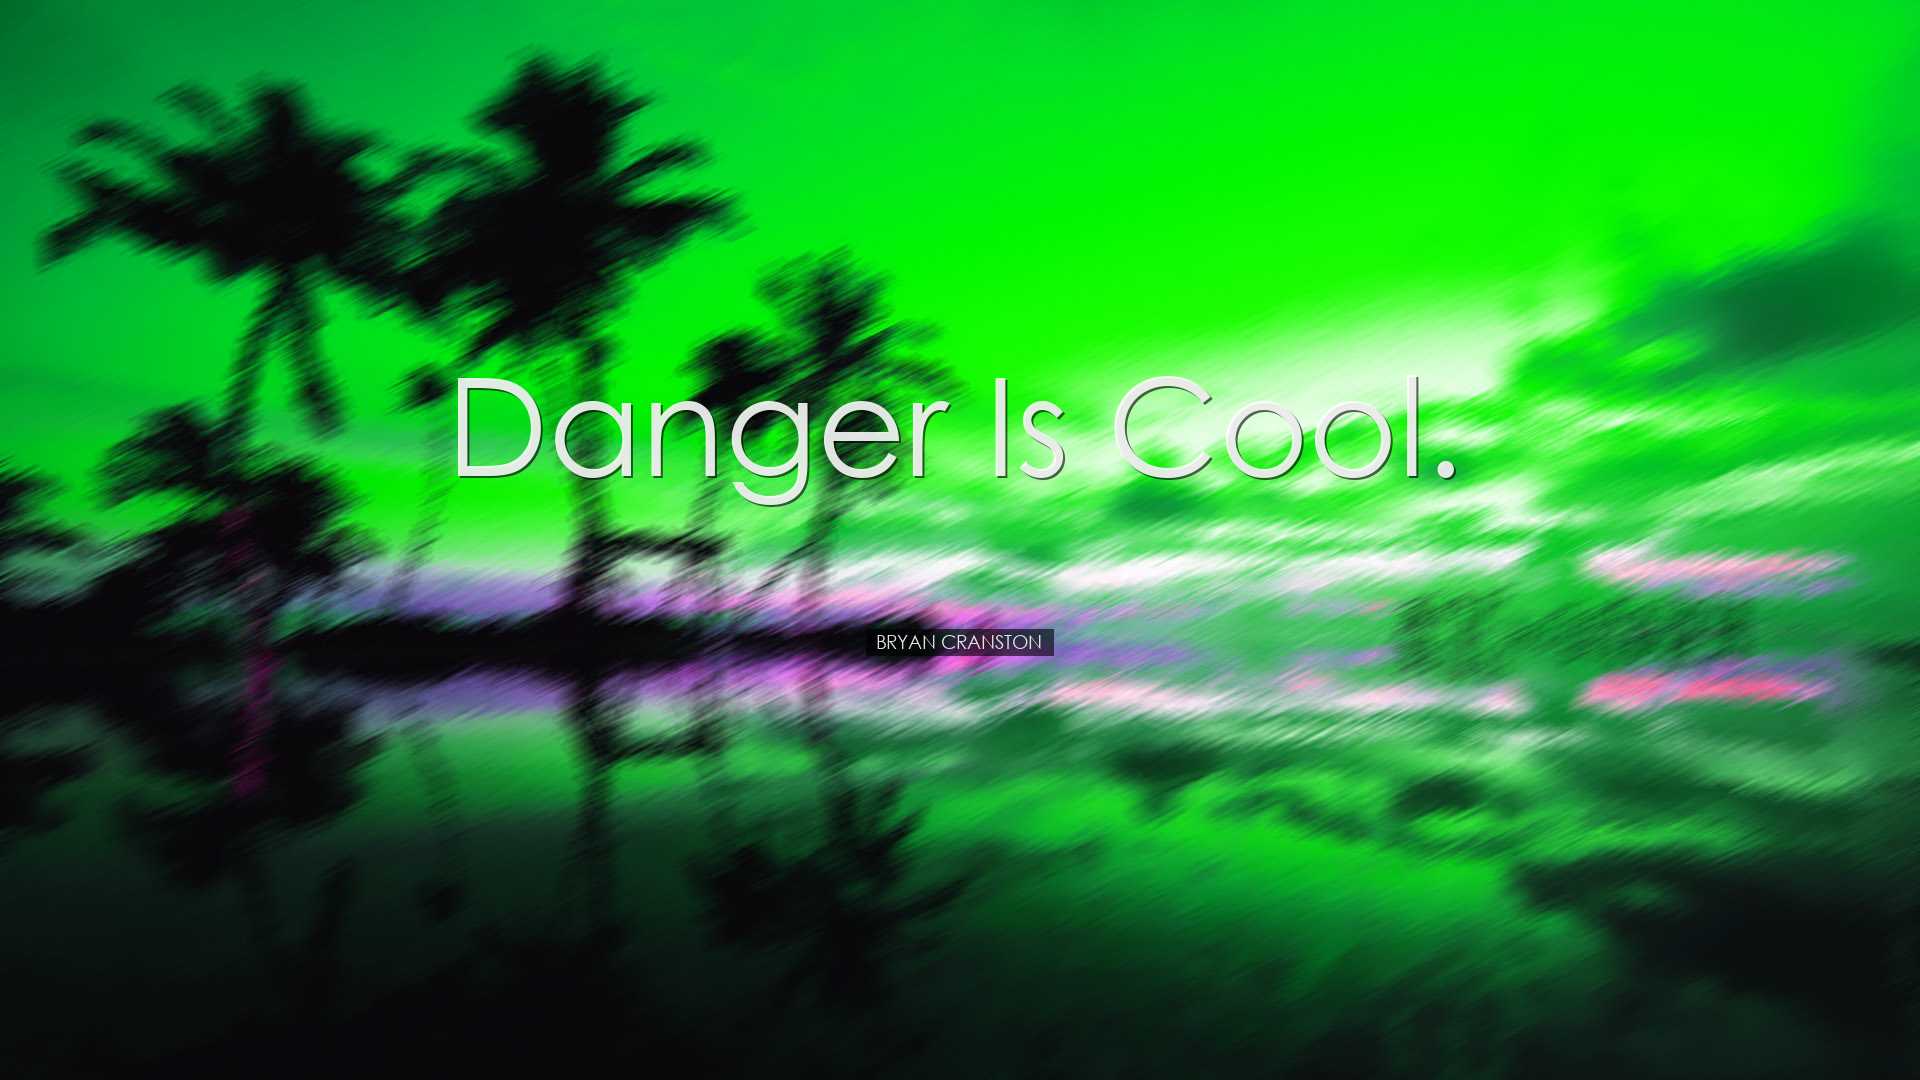 Danger is cool. - Bryan Cranston